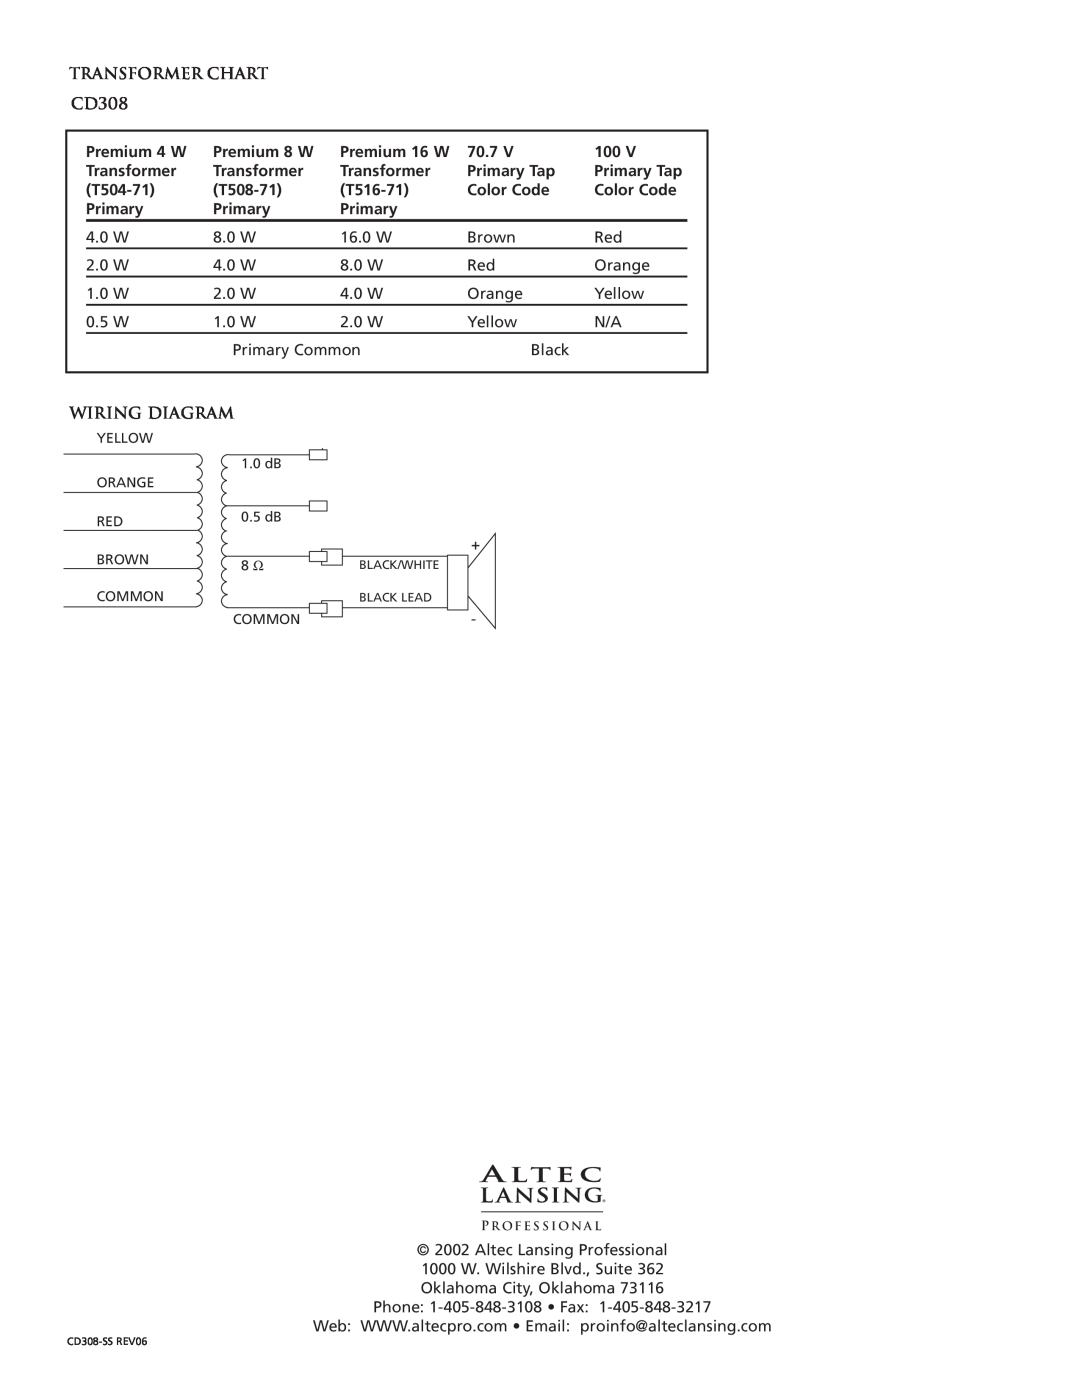 Altec Lansing CD308-8T, CD308-4T, CD308-8A, CD308-16T specifications TRANSFORMER CHART CD308, Wiring Diagram, Premium 4 W 